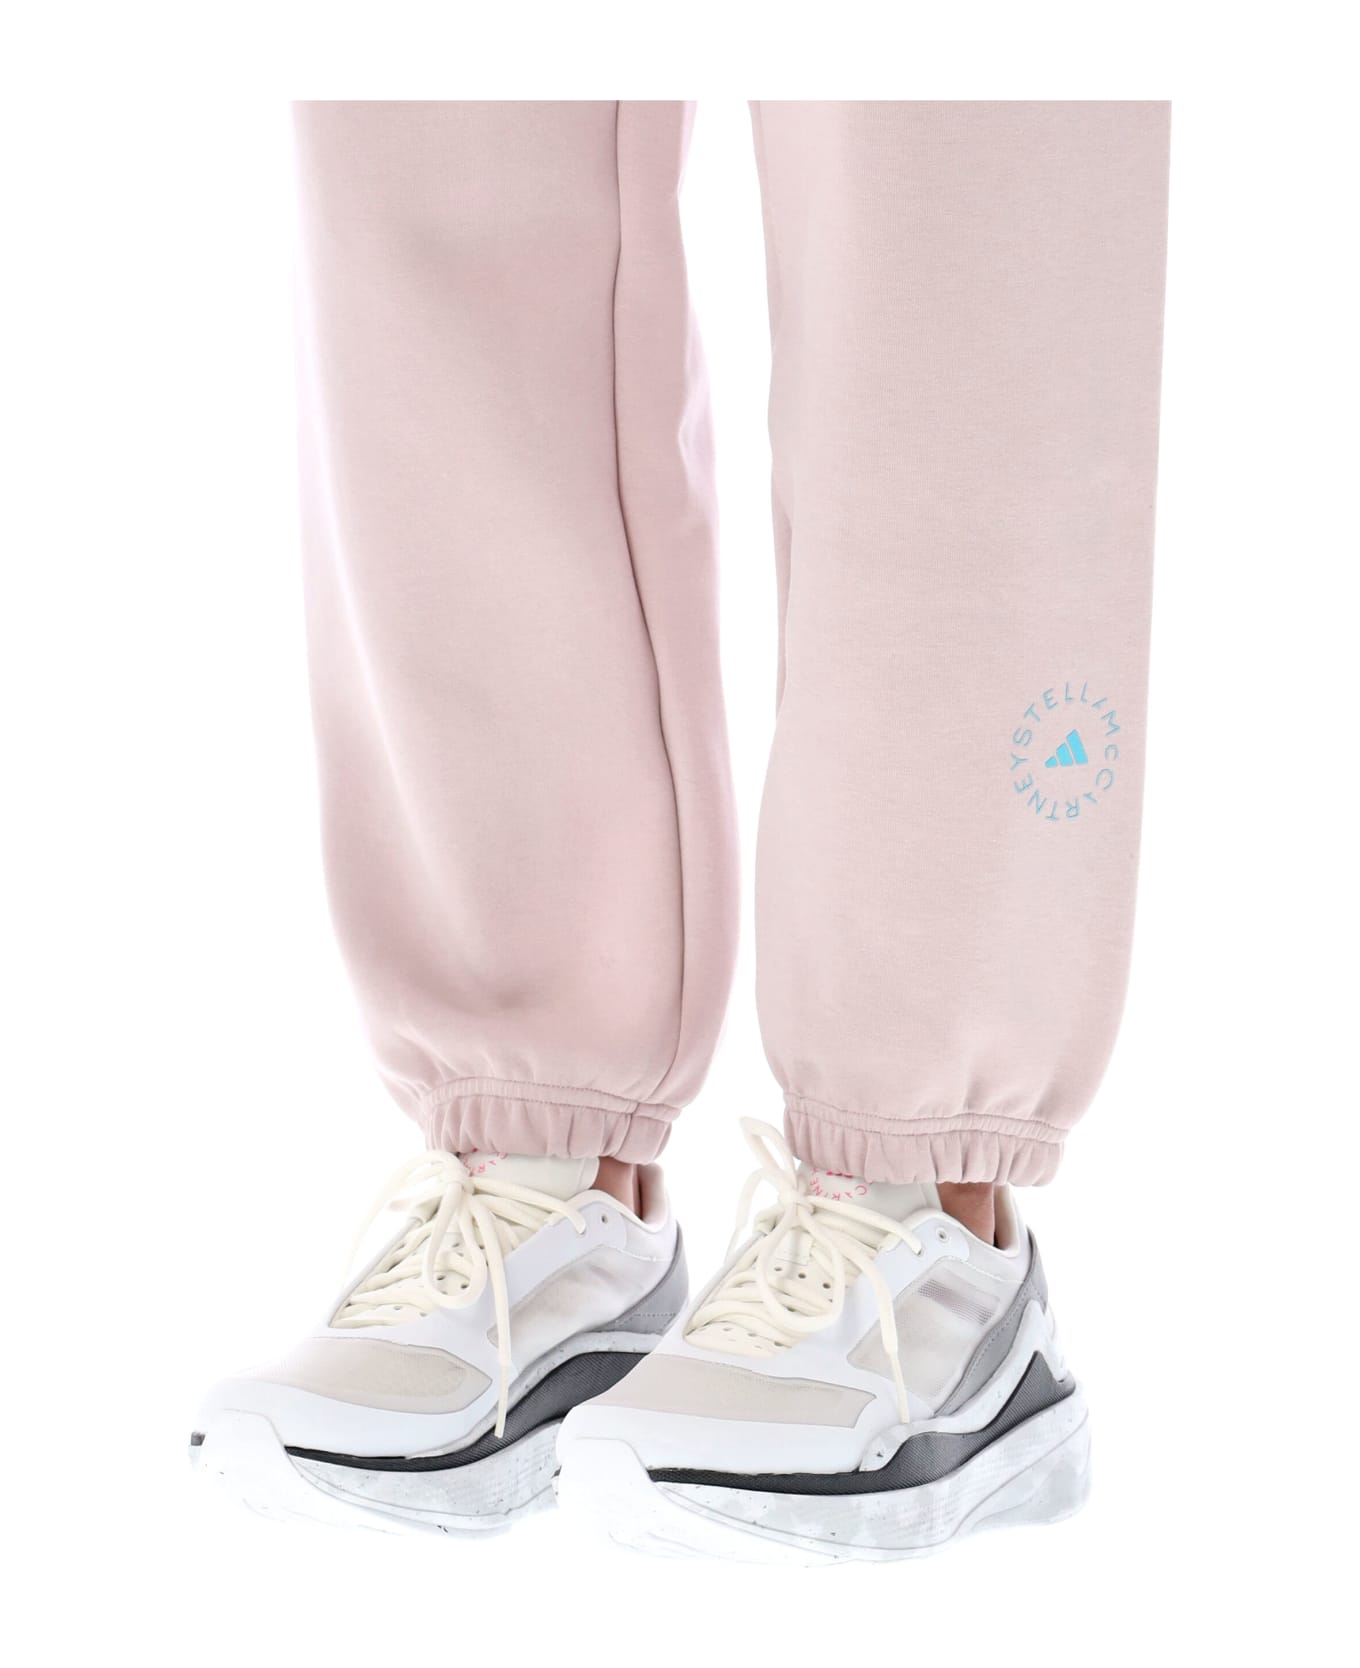 Adidas by Stella McCartney Logo Sweatpants - NEW PINK スウェットパンツ